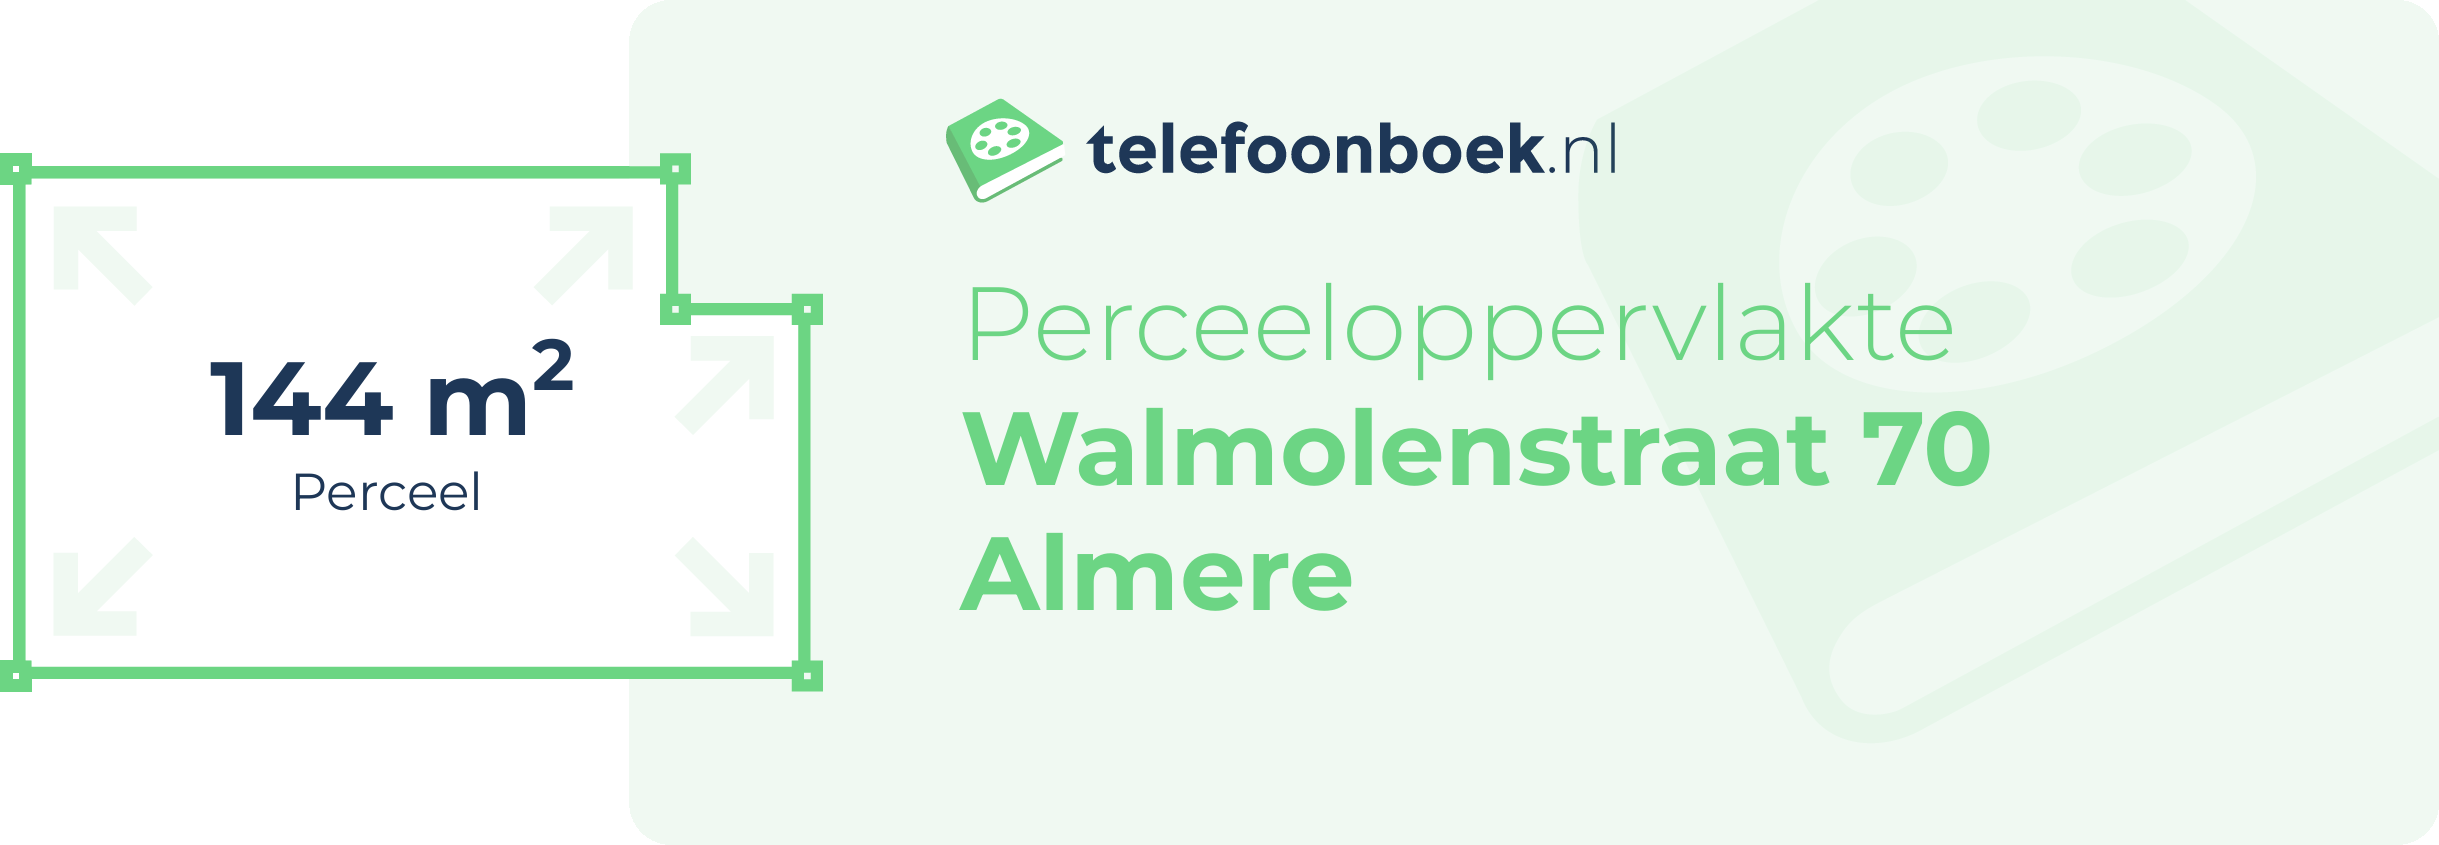 Perceeloppervlakte Walmolenstraat 70 Almere